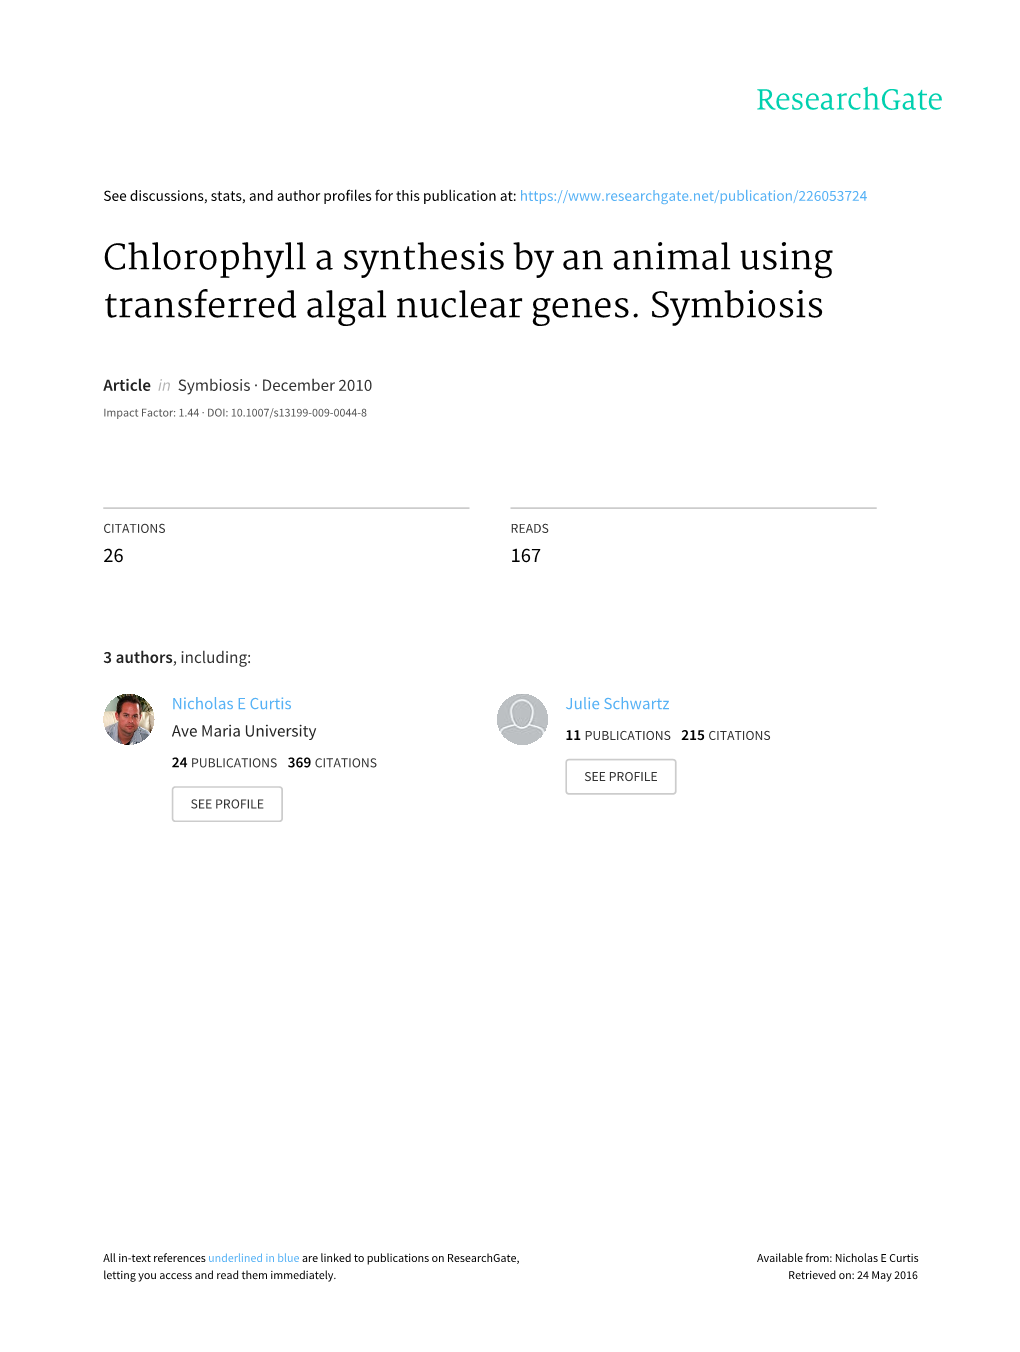 Chlorophyll a Synthesis by an Animal Using Transferred Algal Nuclear Genes